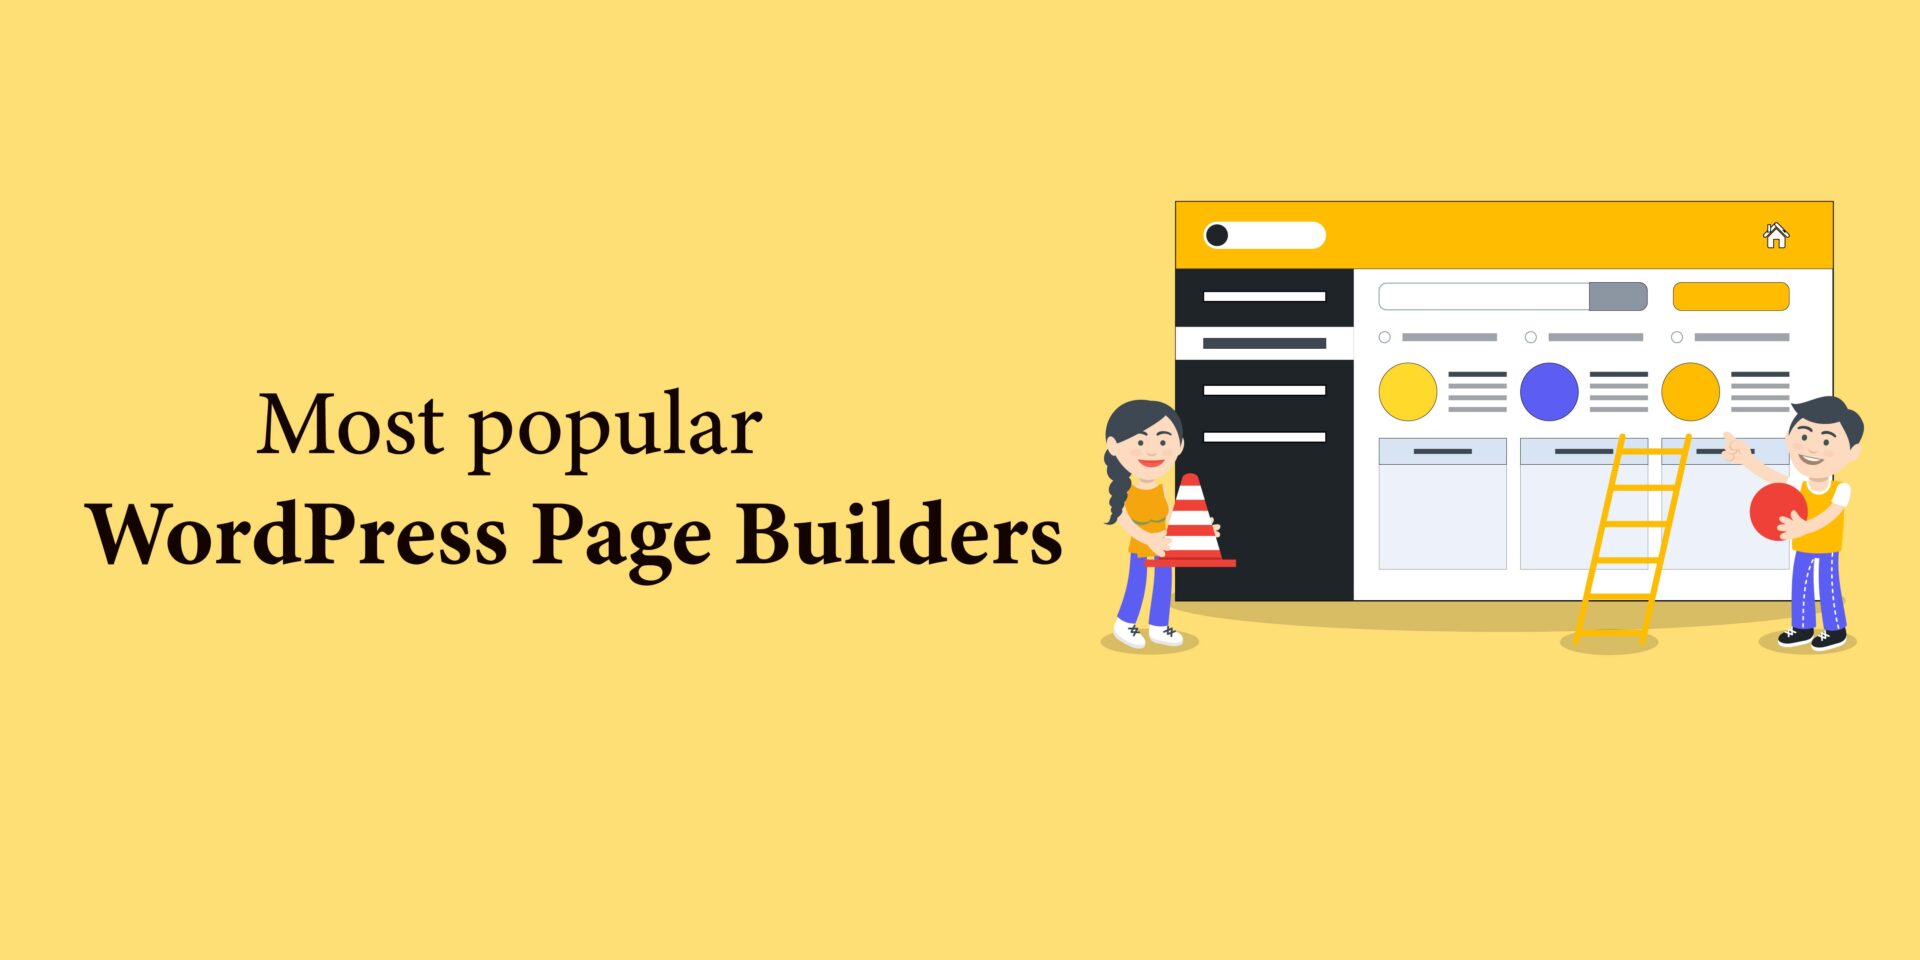 Most popular WordPress Page Builders